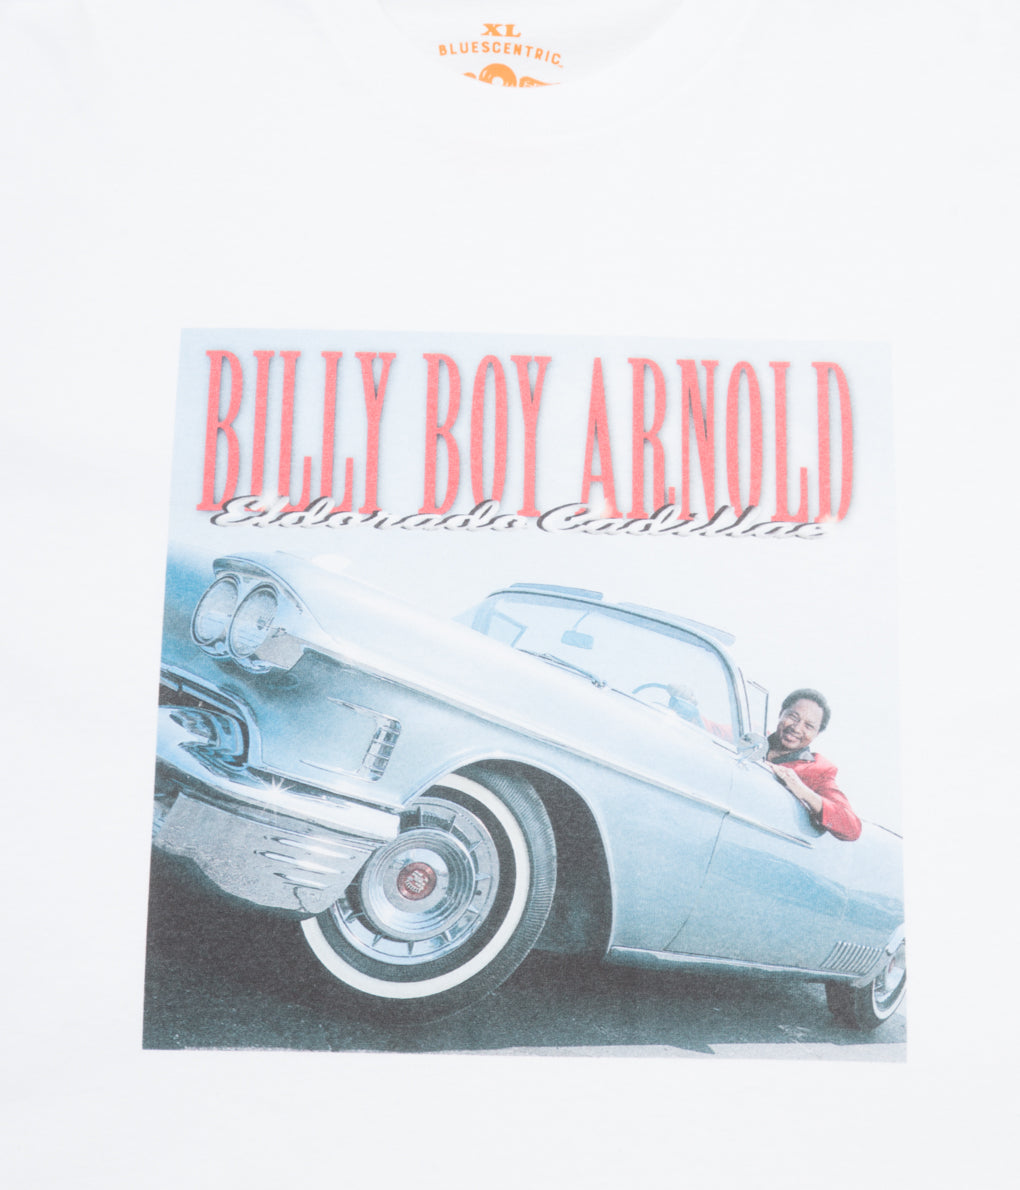 BLUESCENTRIC "BILLY BOY ARNOLD ELDORADO CADILLAC T-SHIRT" (WHITE)